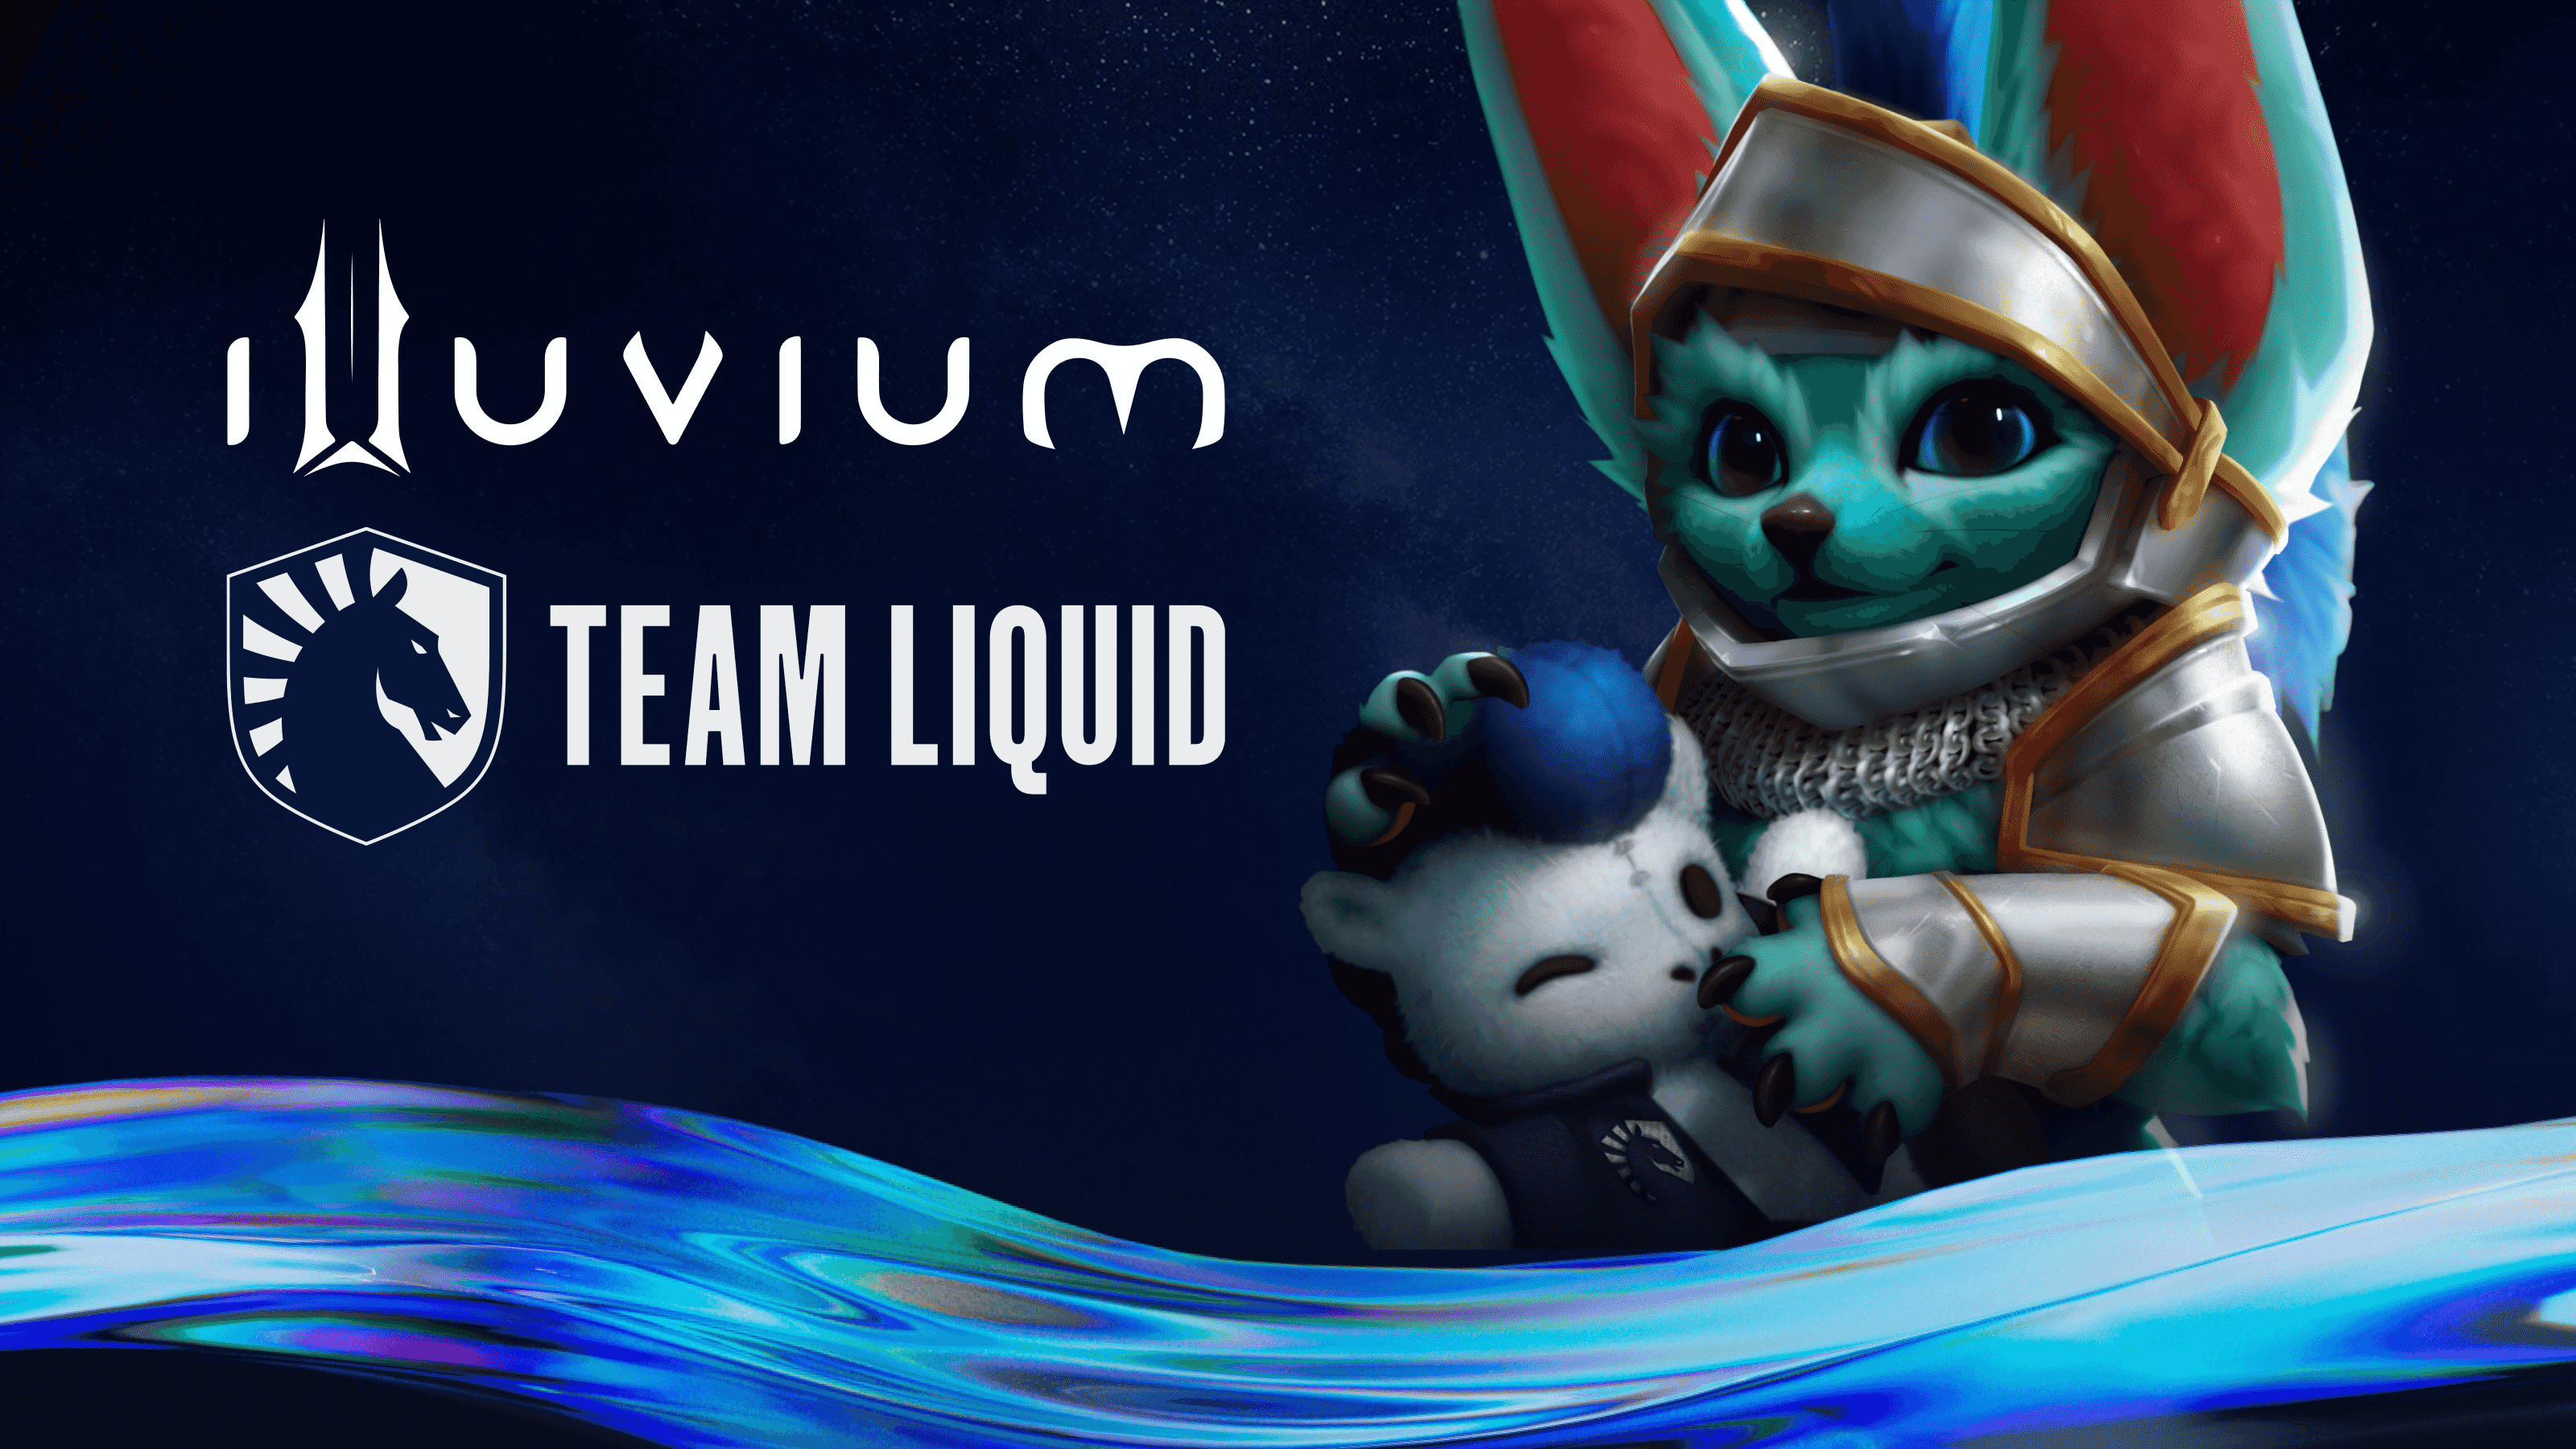 Team Liquid and Illuvium are planning an NFT e-sports tournament